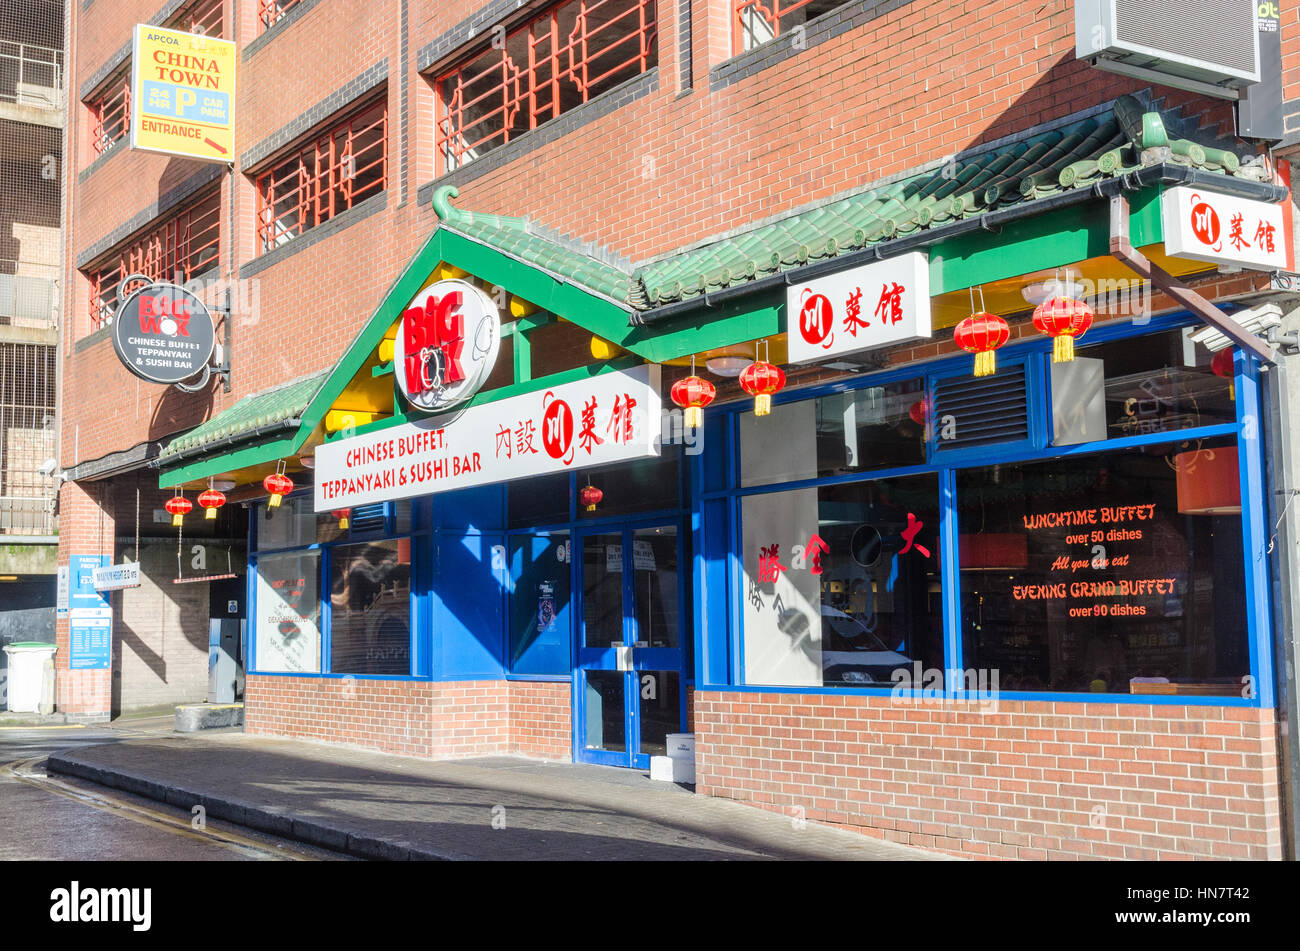 Il Wok grande buffet cinese teppanyaki e sushi bar in Wrottesley Street, Birmingham Foto Stock